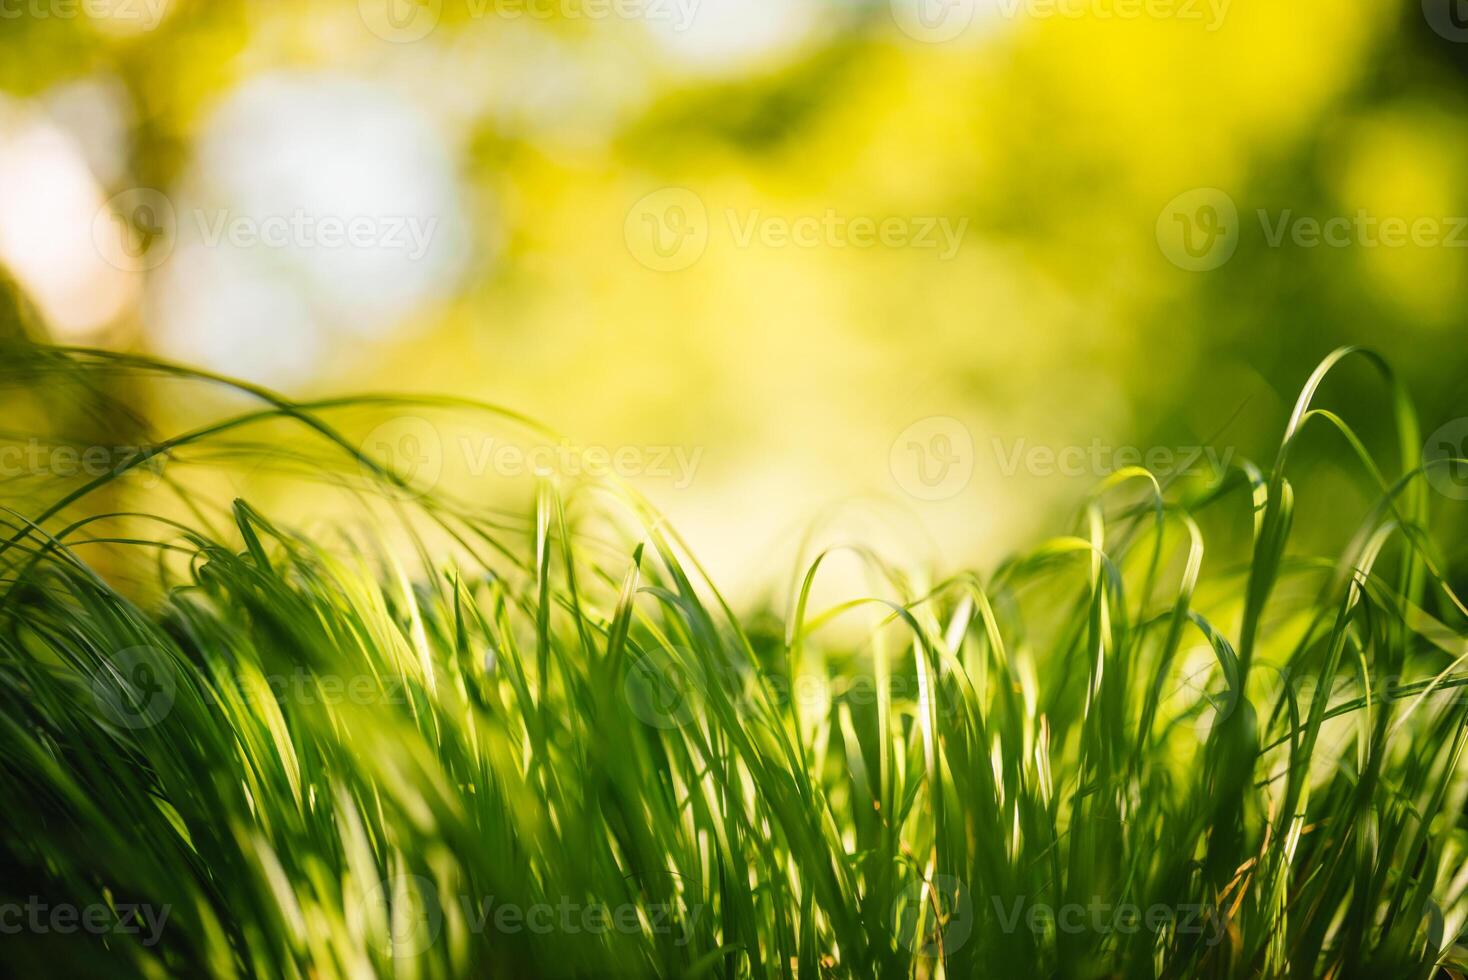 Frühling oder Sommer- und abstrakt Natur Hintergrund mit Gras Feld. Hintergrund mit Grün Gras Feld und Bokeh Licht. Sommer- Hintergrund. foto